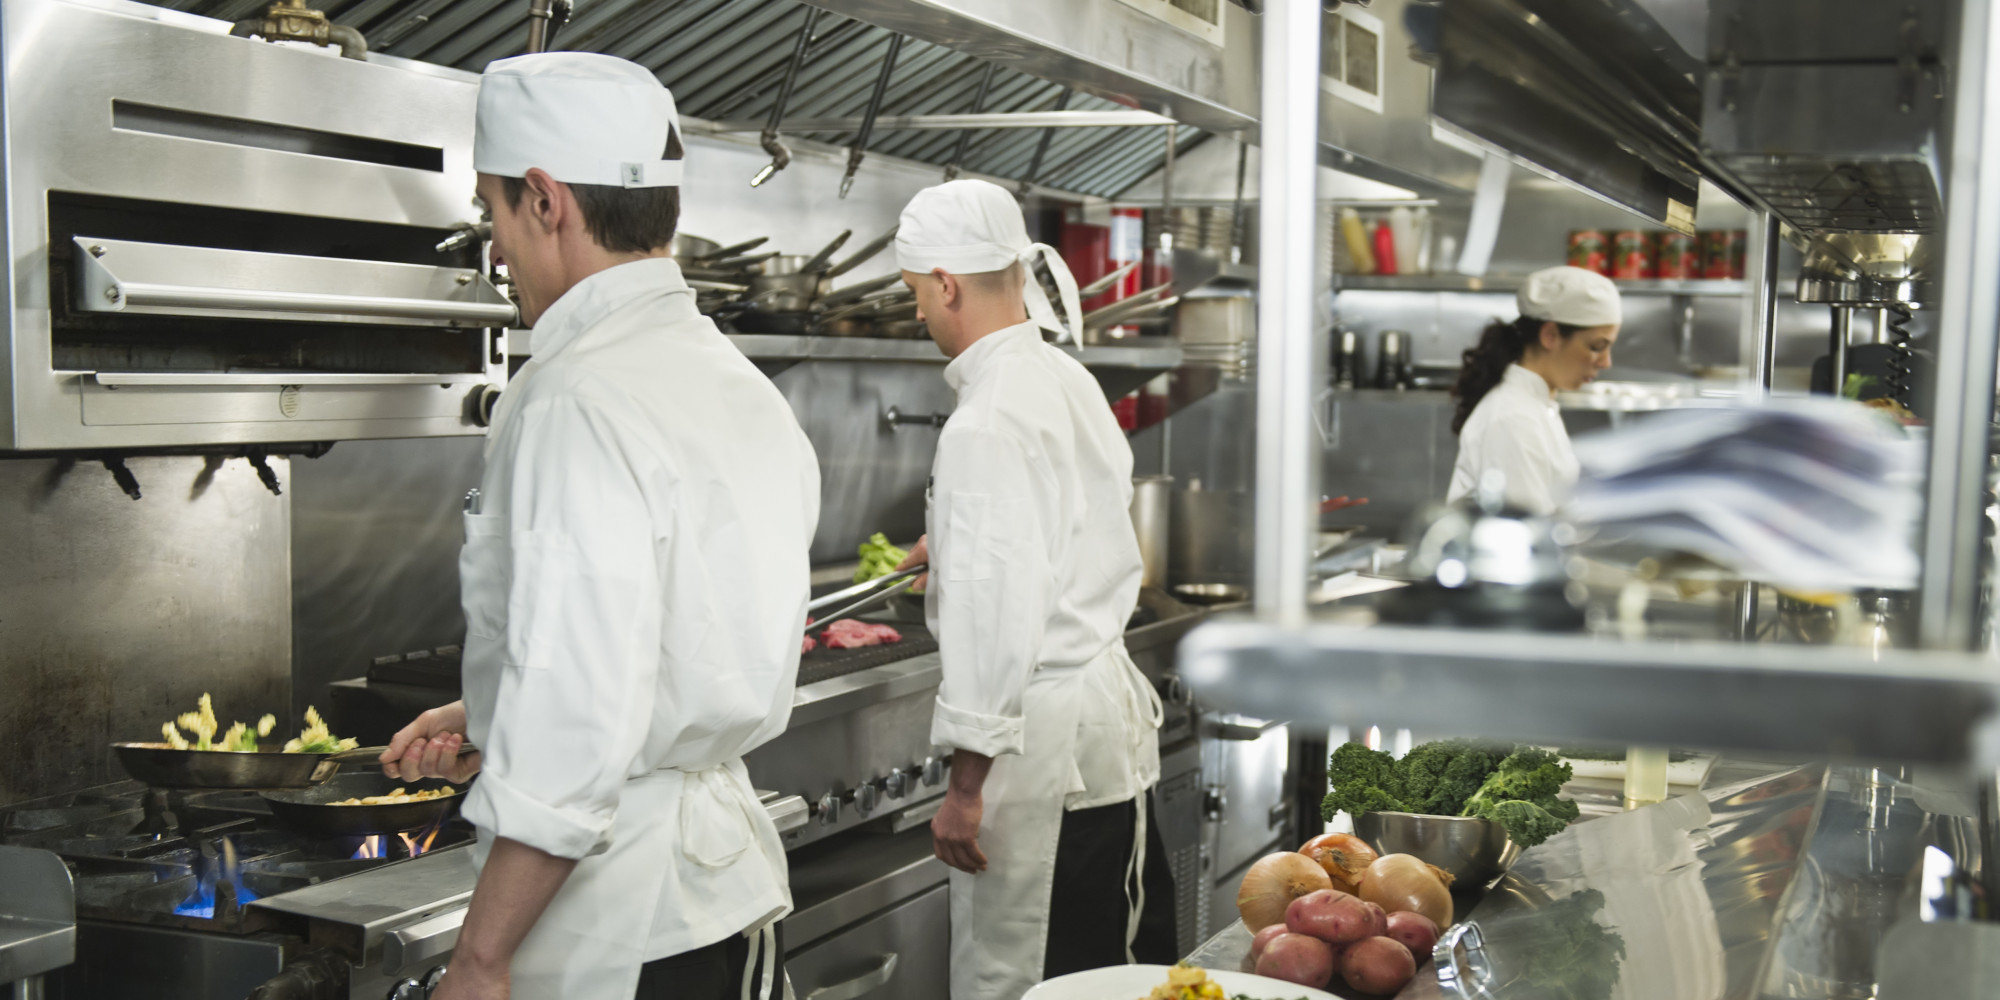 USA, New York State, New York City, Chefs preparing food in kitchen